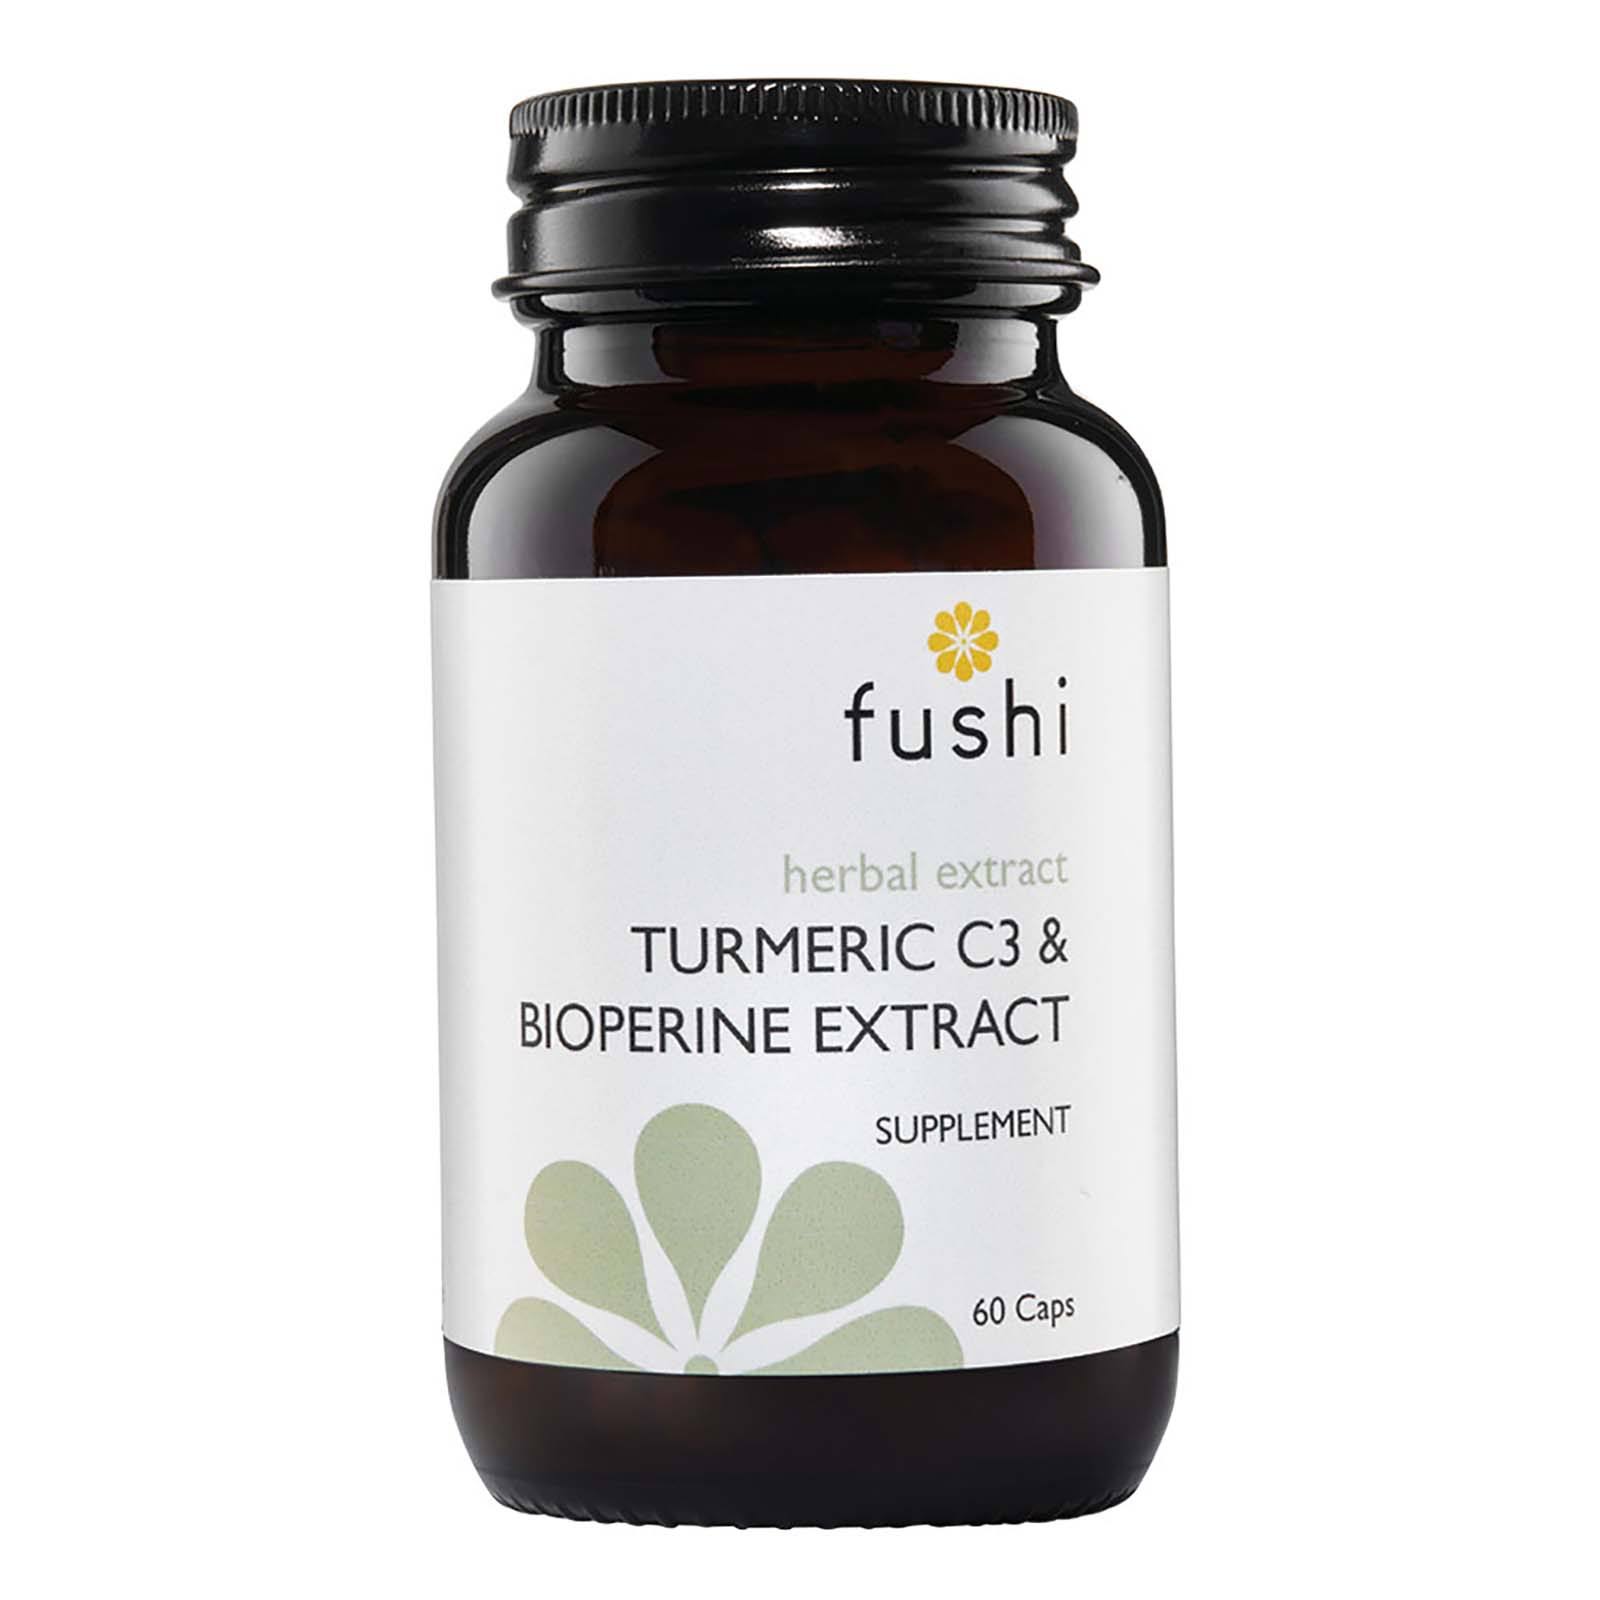 Fushi Turmeric C3 & Bioperine Extract 60 caps